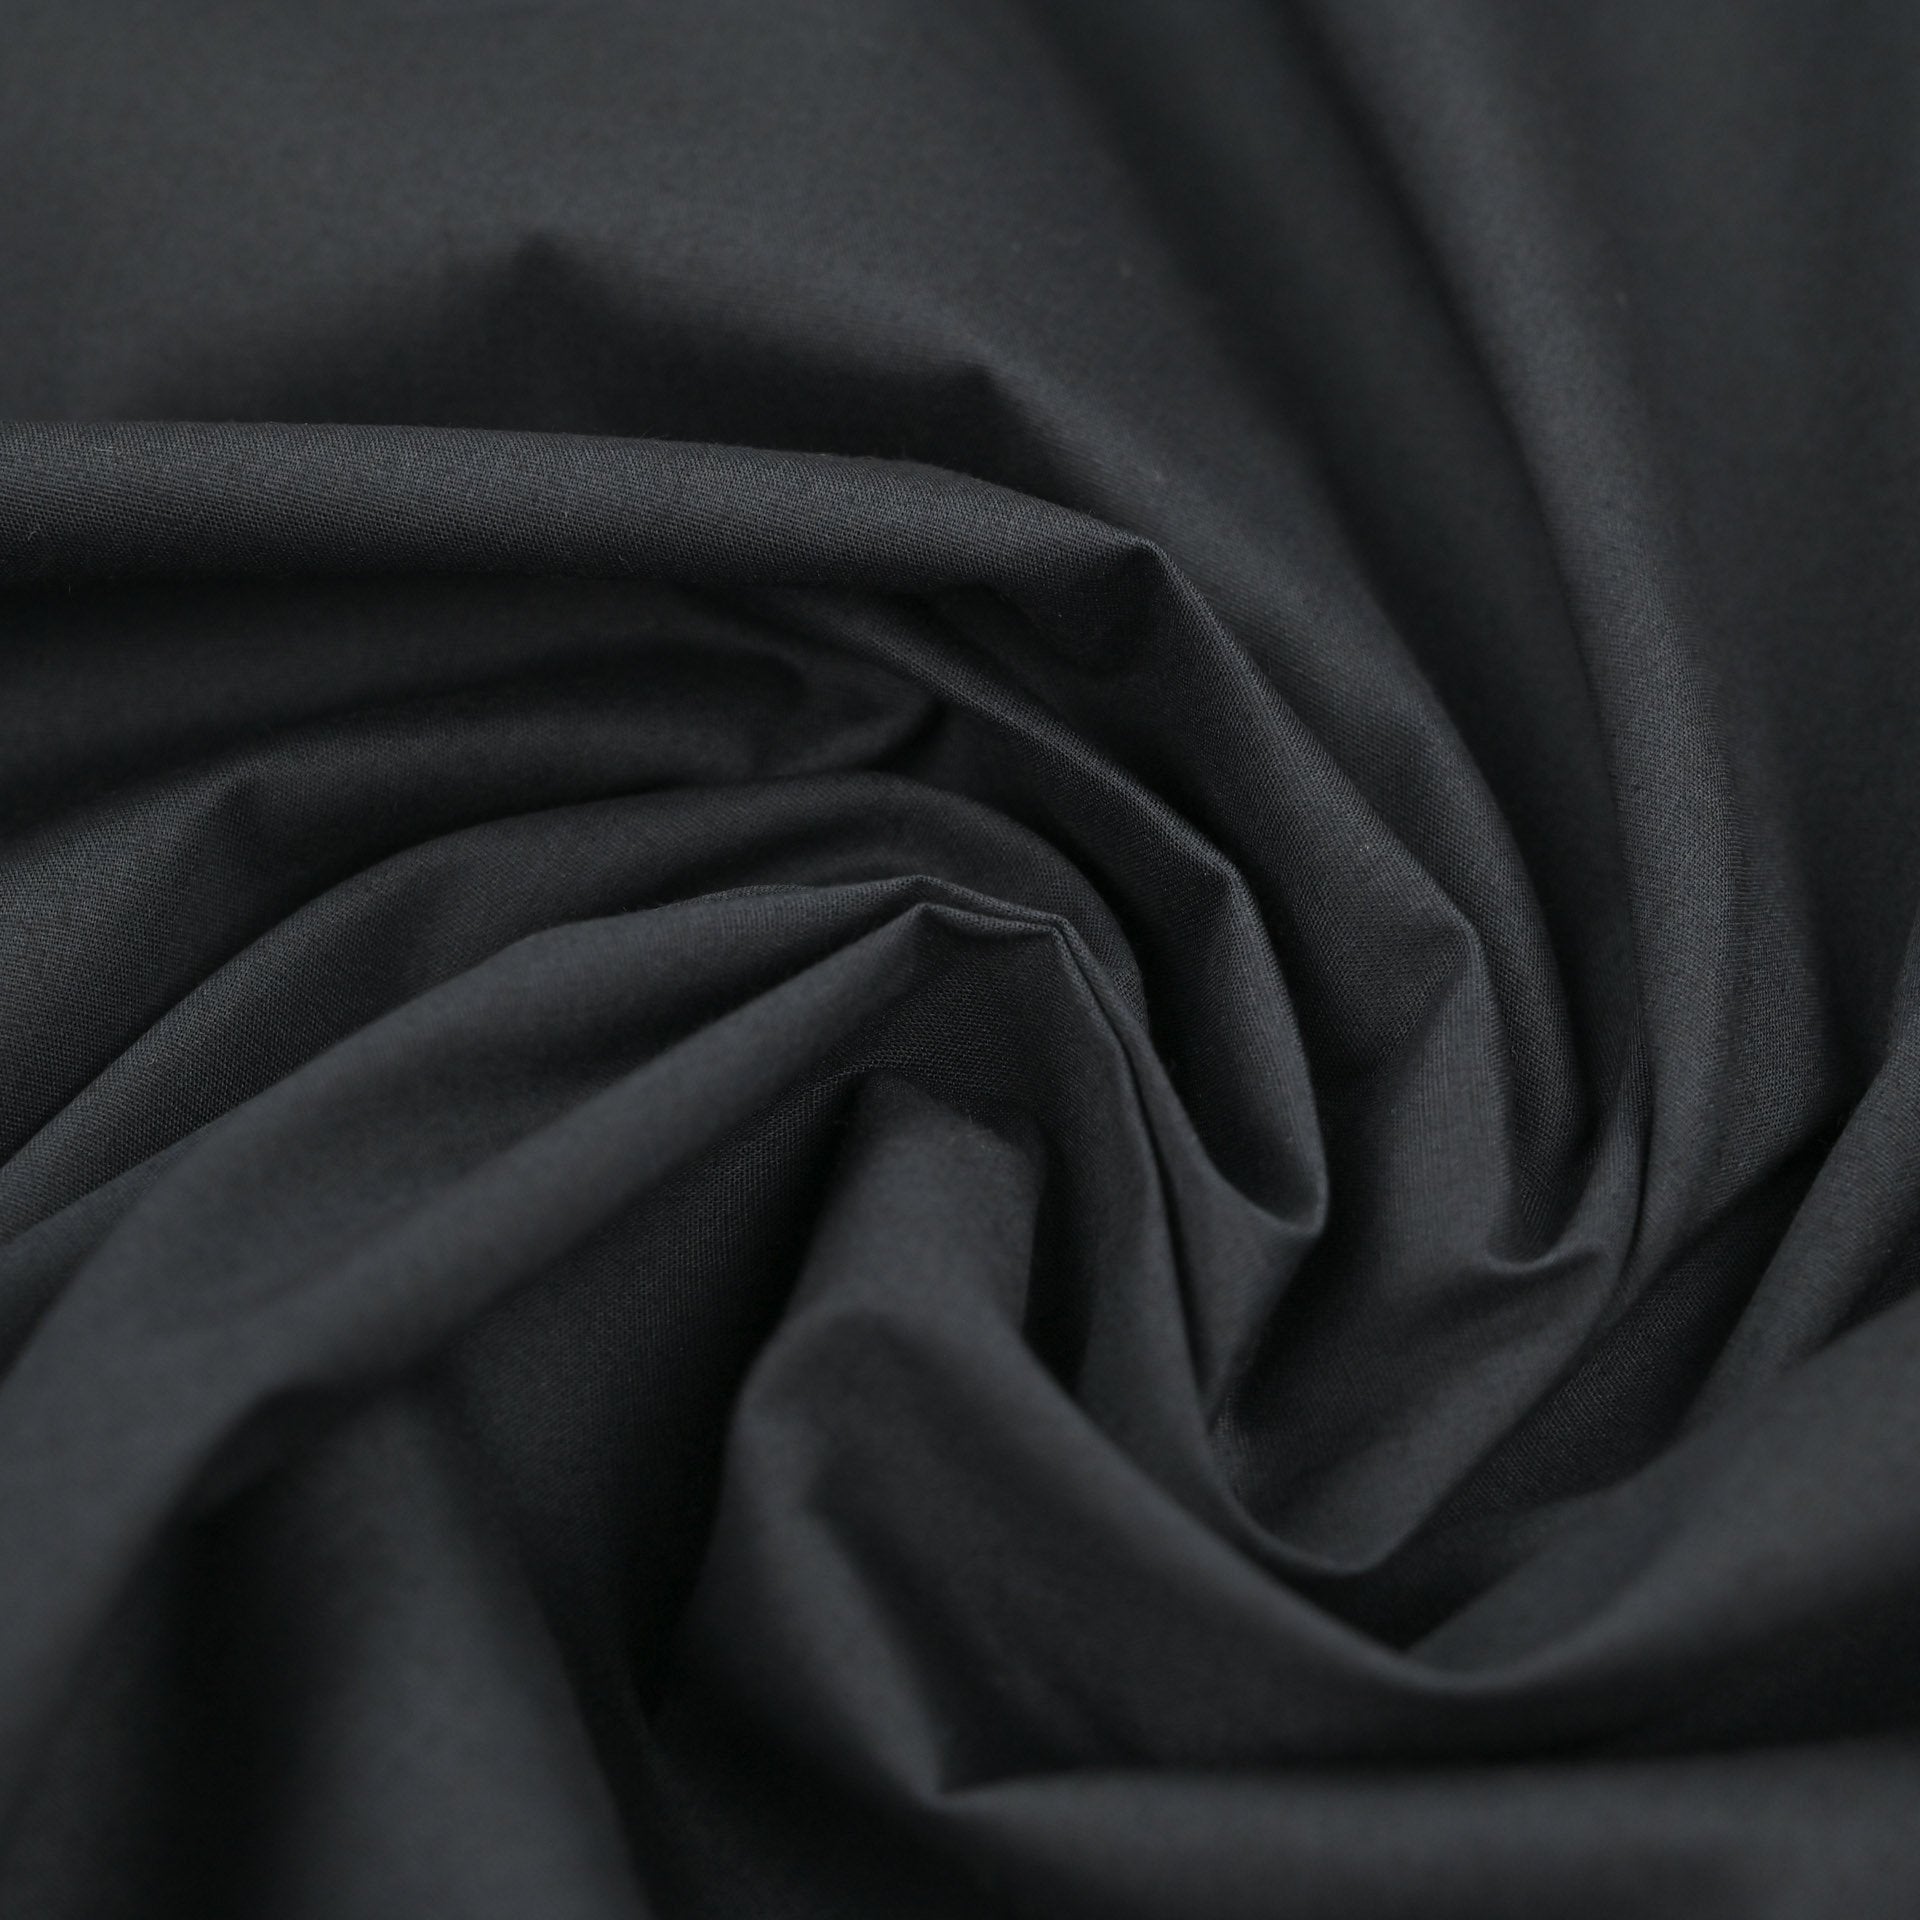 Navy Shirting Fabric 96478